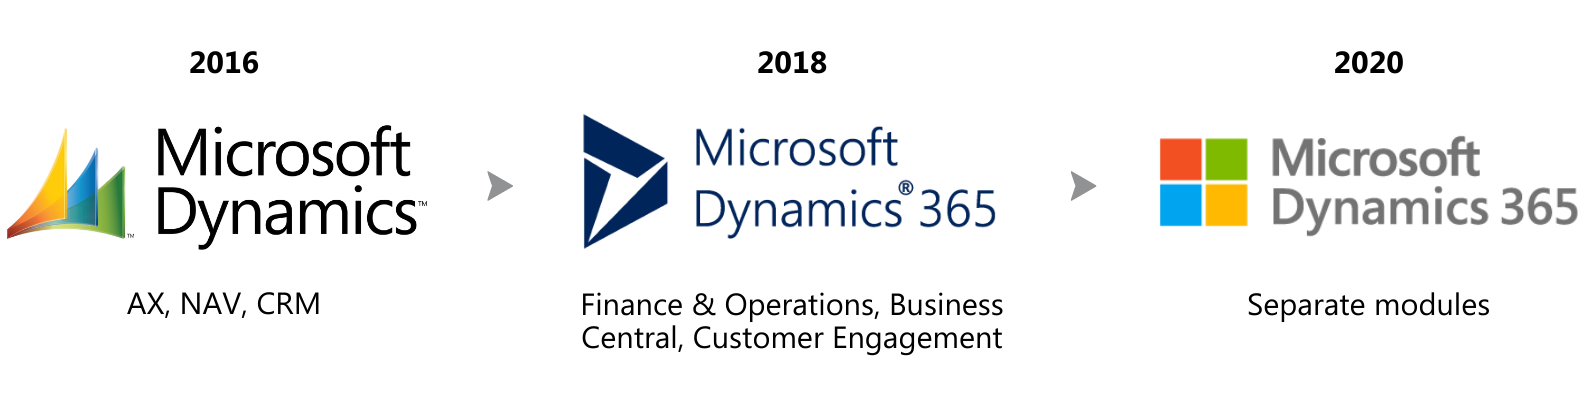 Microsoft Dynamics 365 history